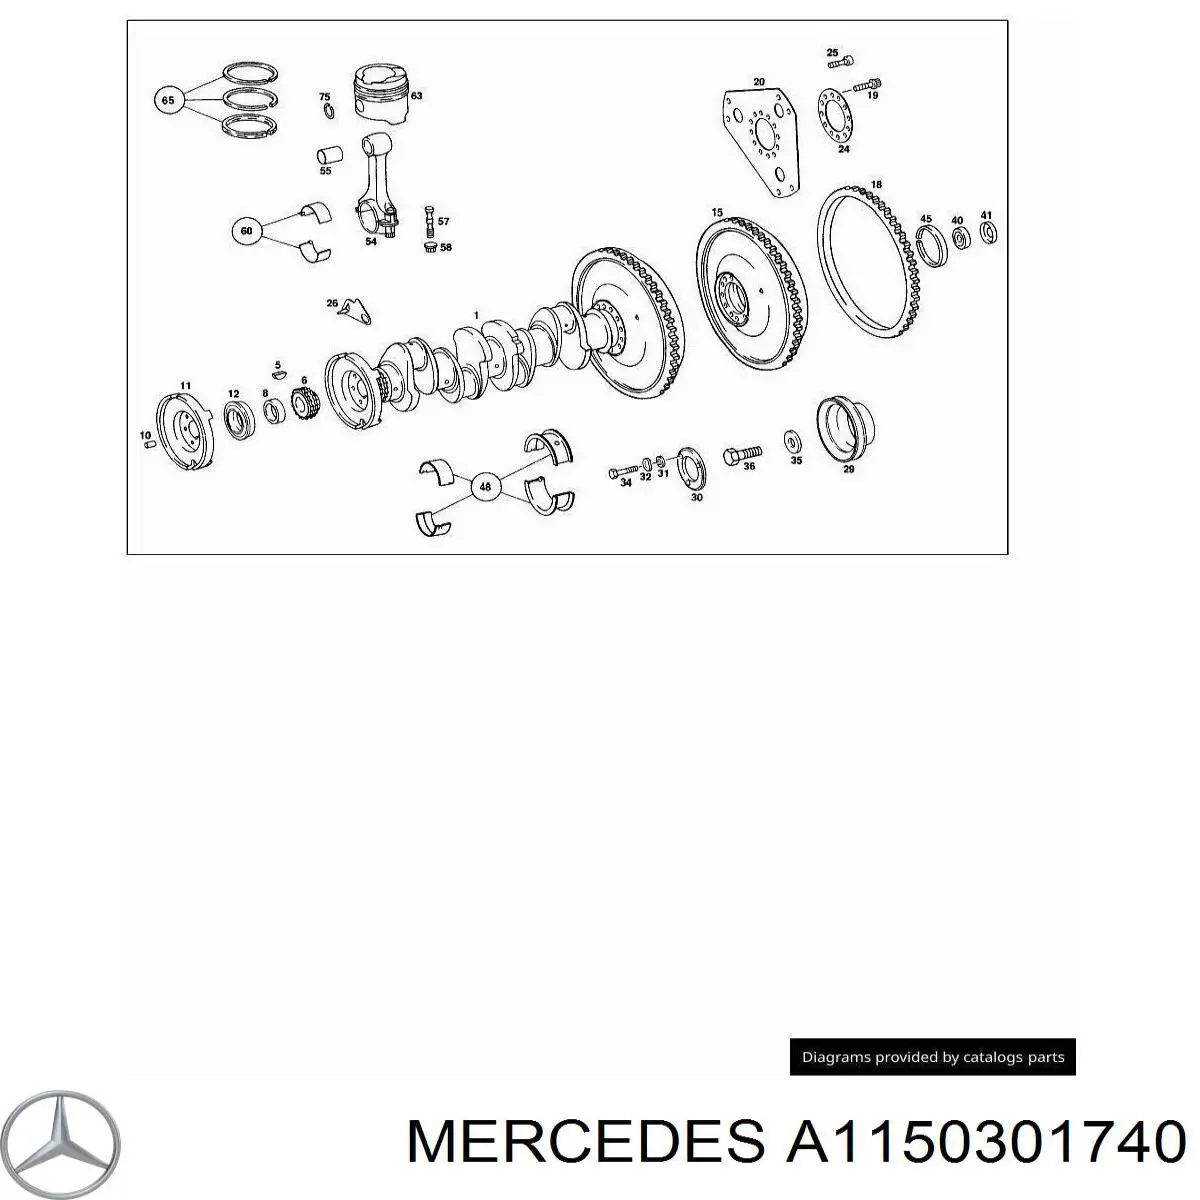 1150301740 Mercedes вкладыши коленвала коренные, комплект, стандарт (std)